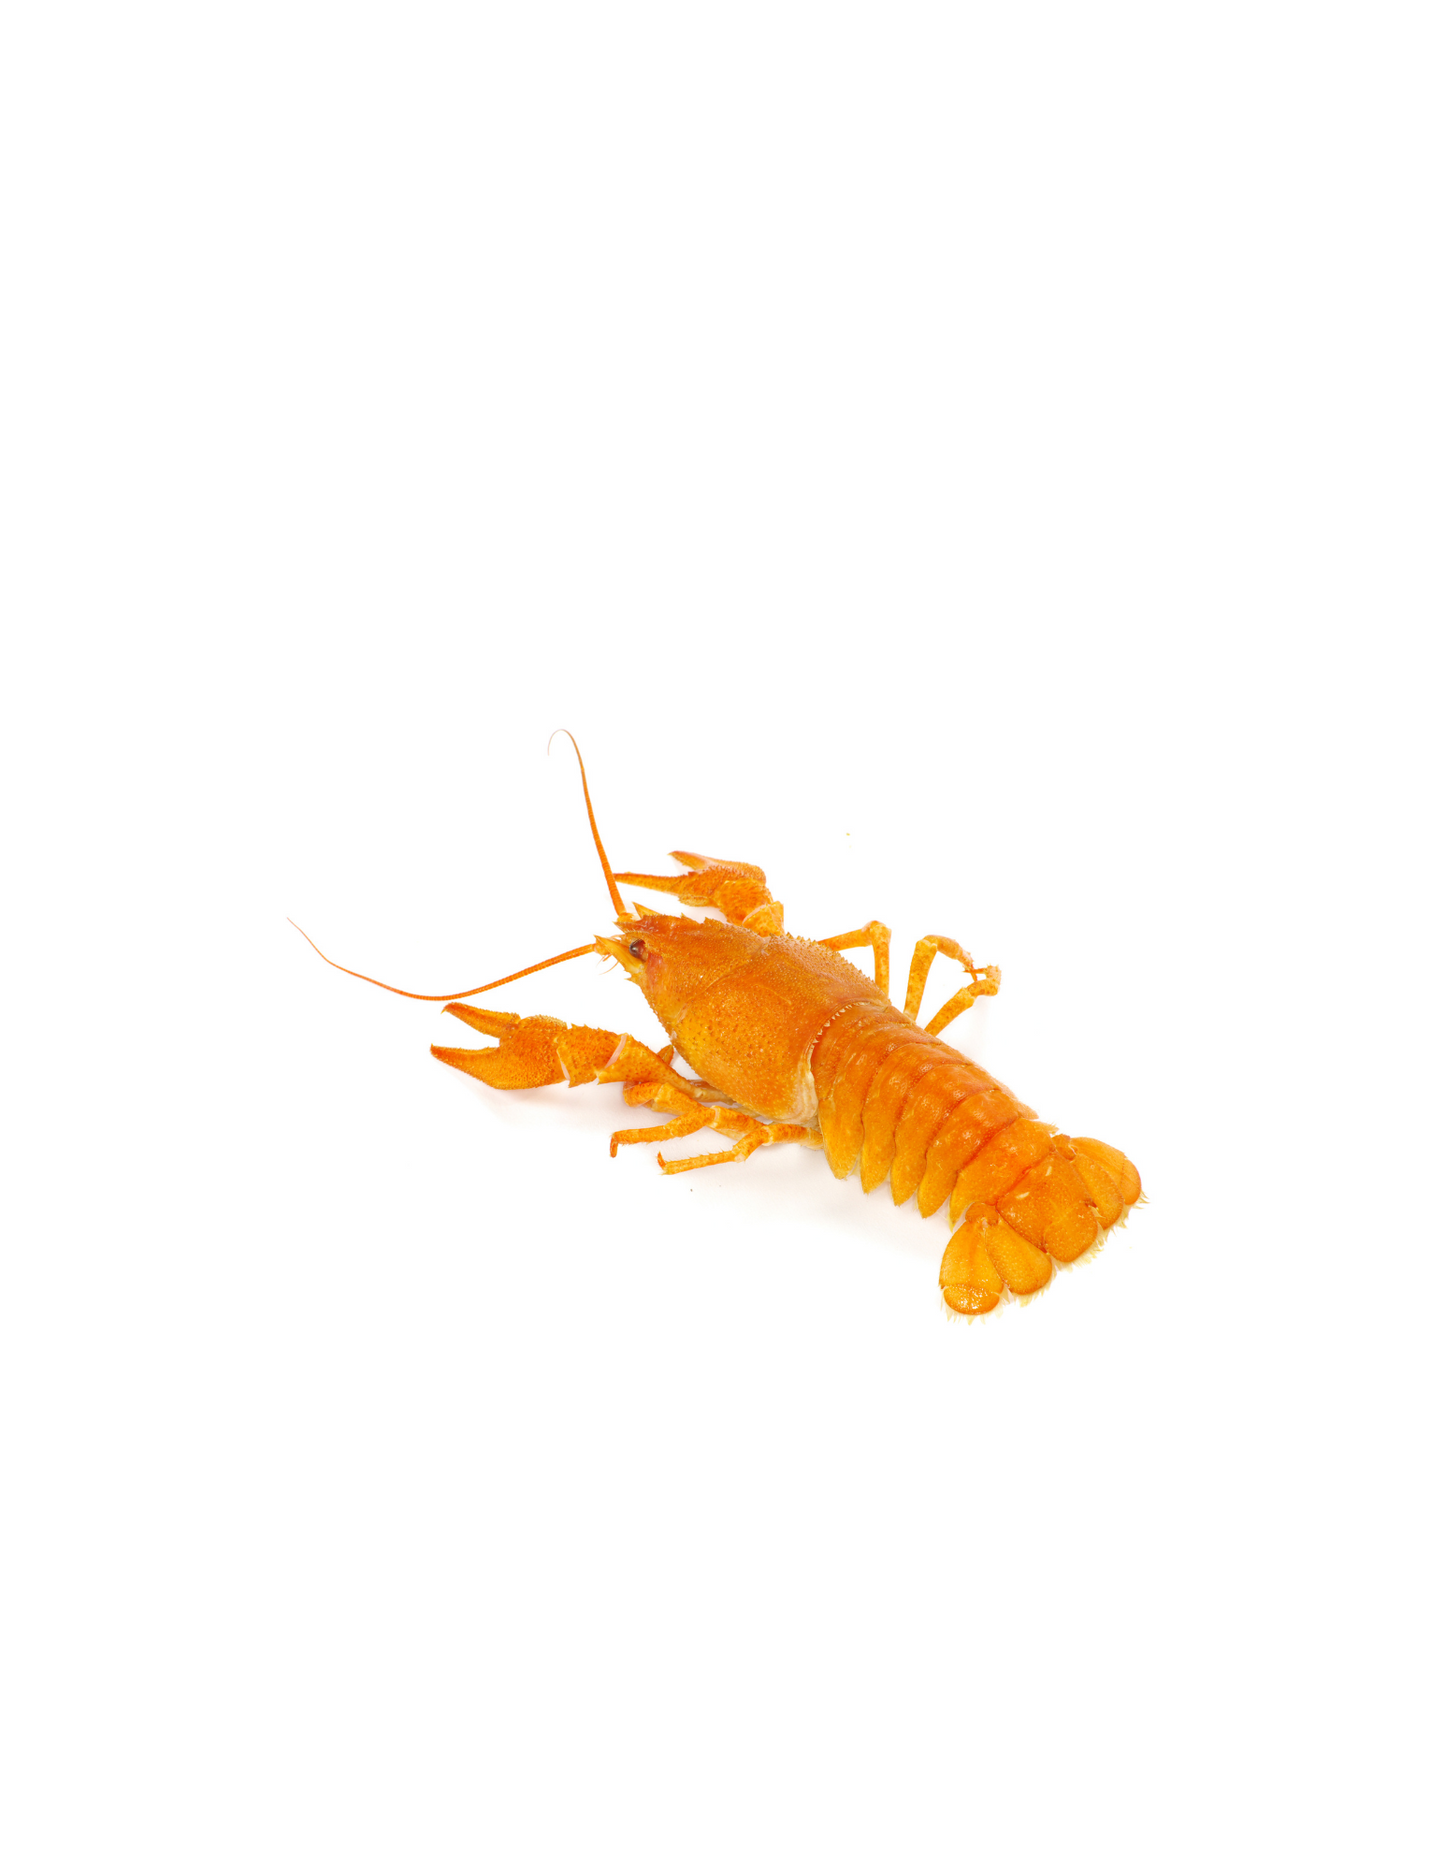 Orange crayfish